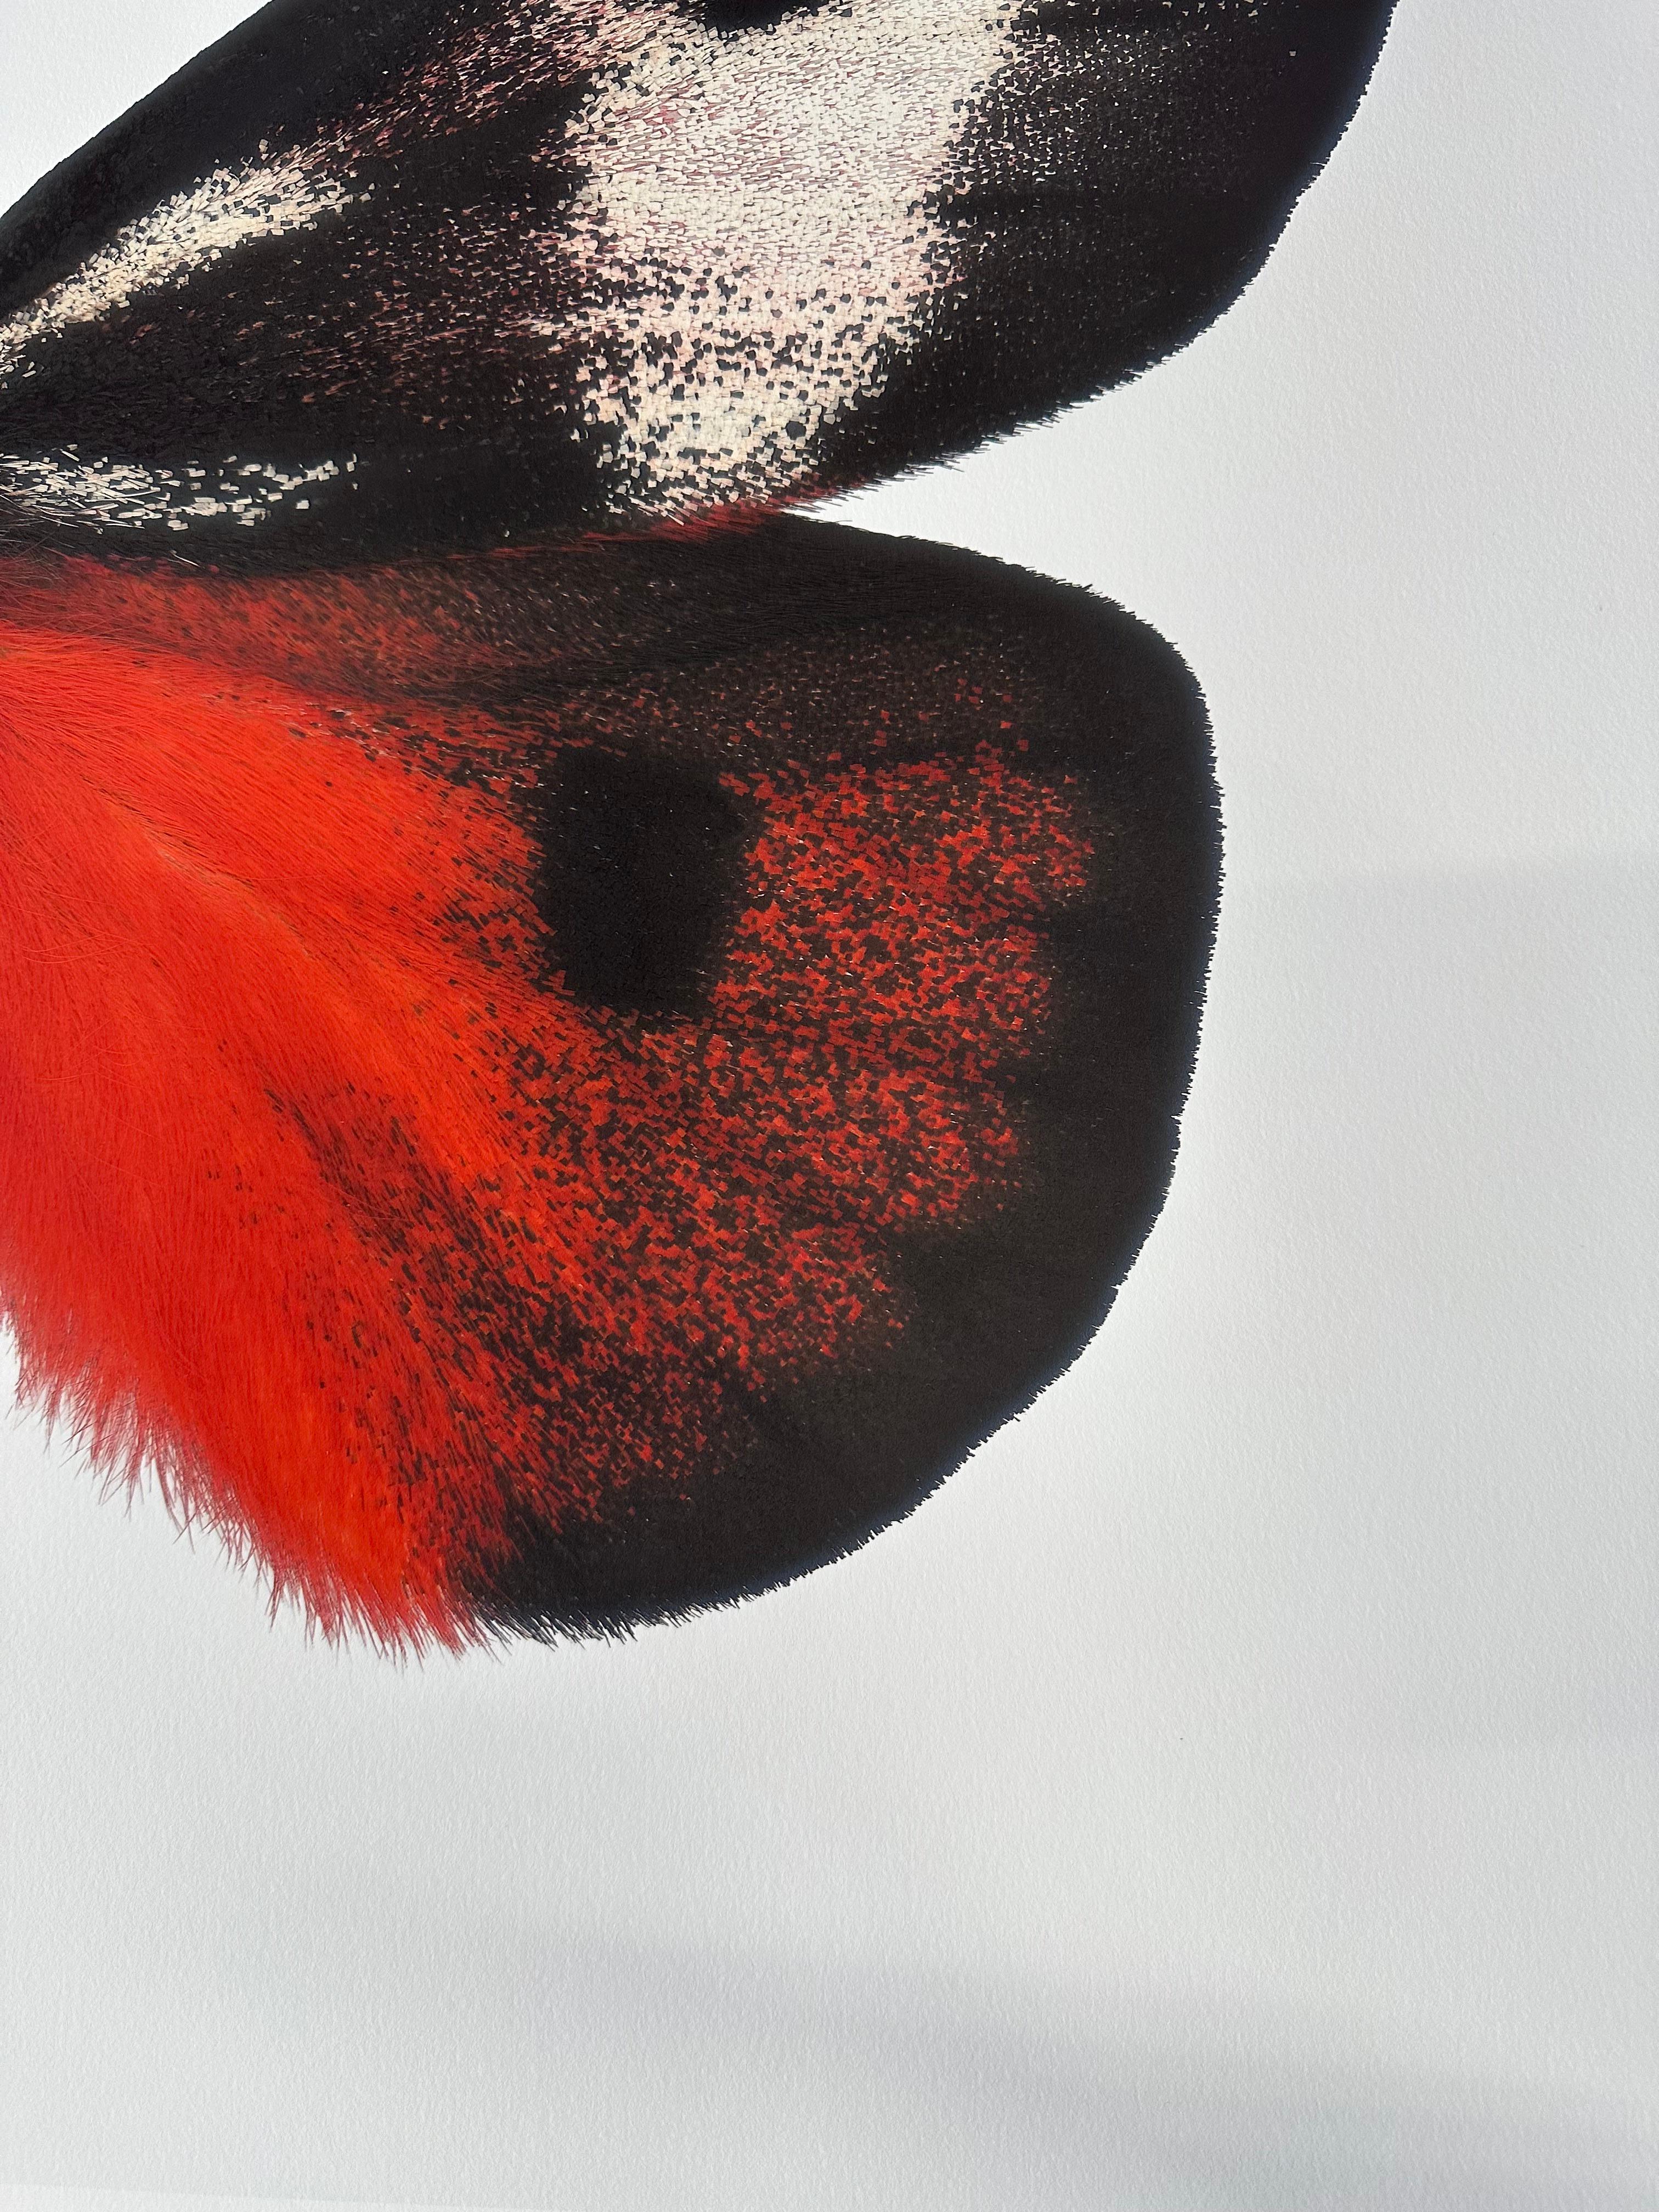 Hemileuca Electra, Red Orange, Black, Yellow White Moth Insect Nature Photographie en vente 9